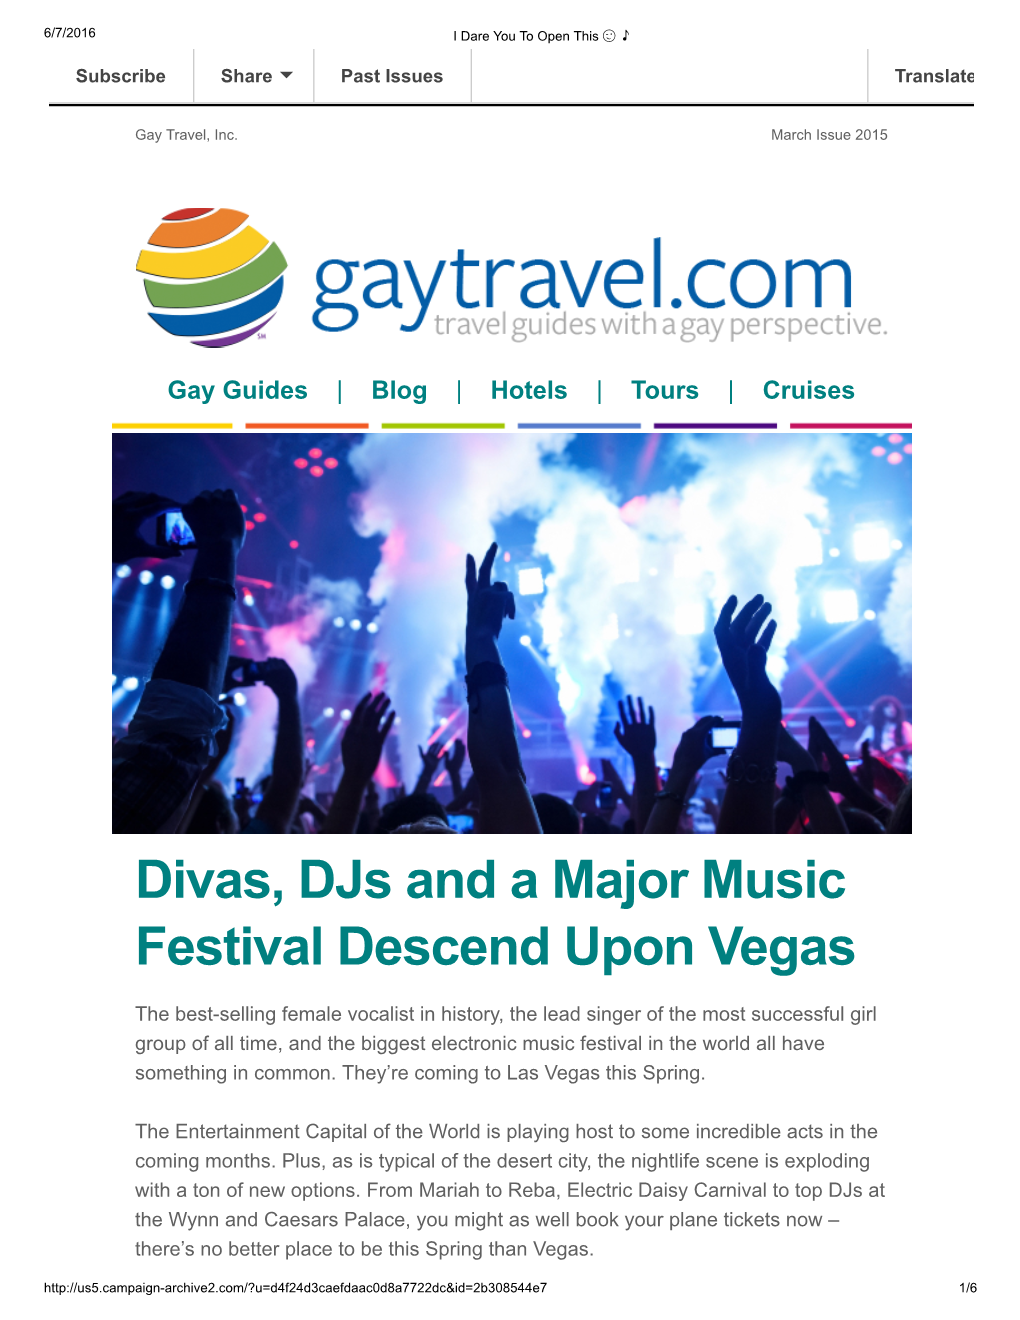 Divas, Djs and a Major Music Festival Descend Upon Vegas